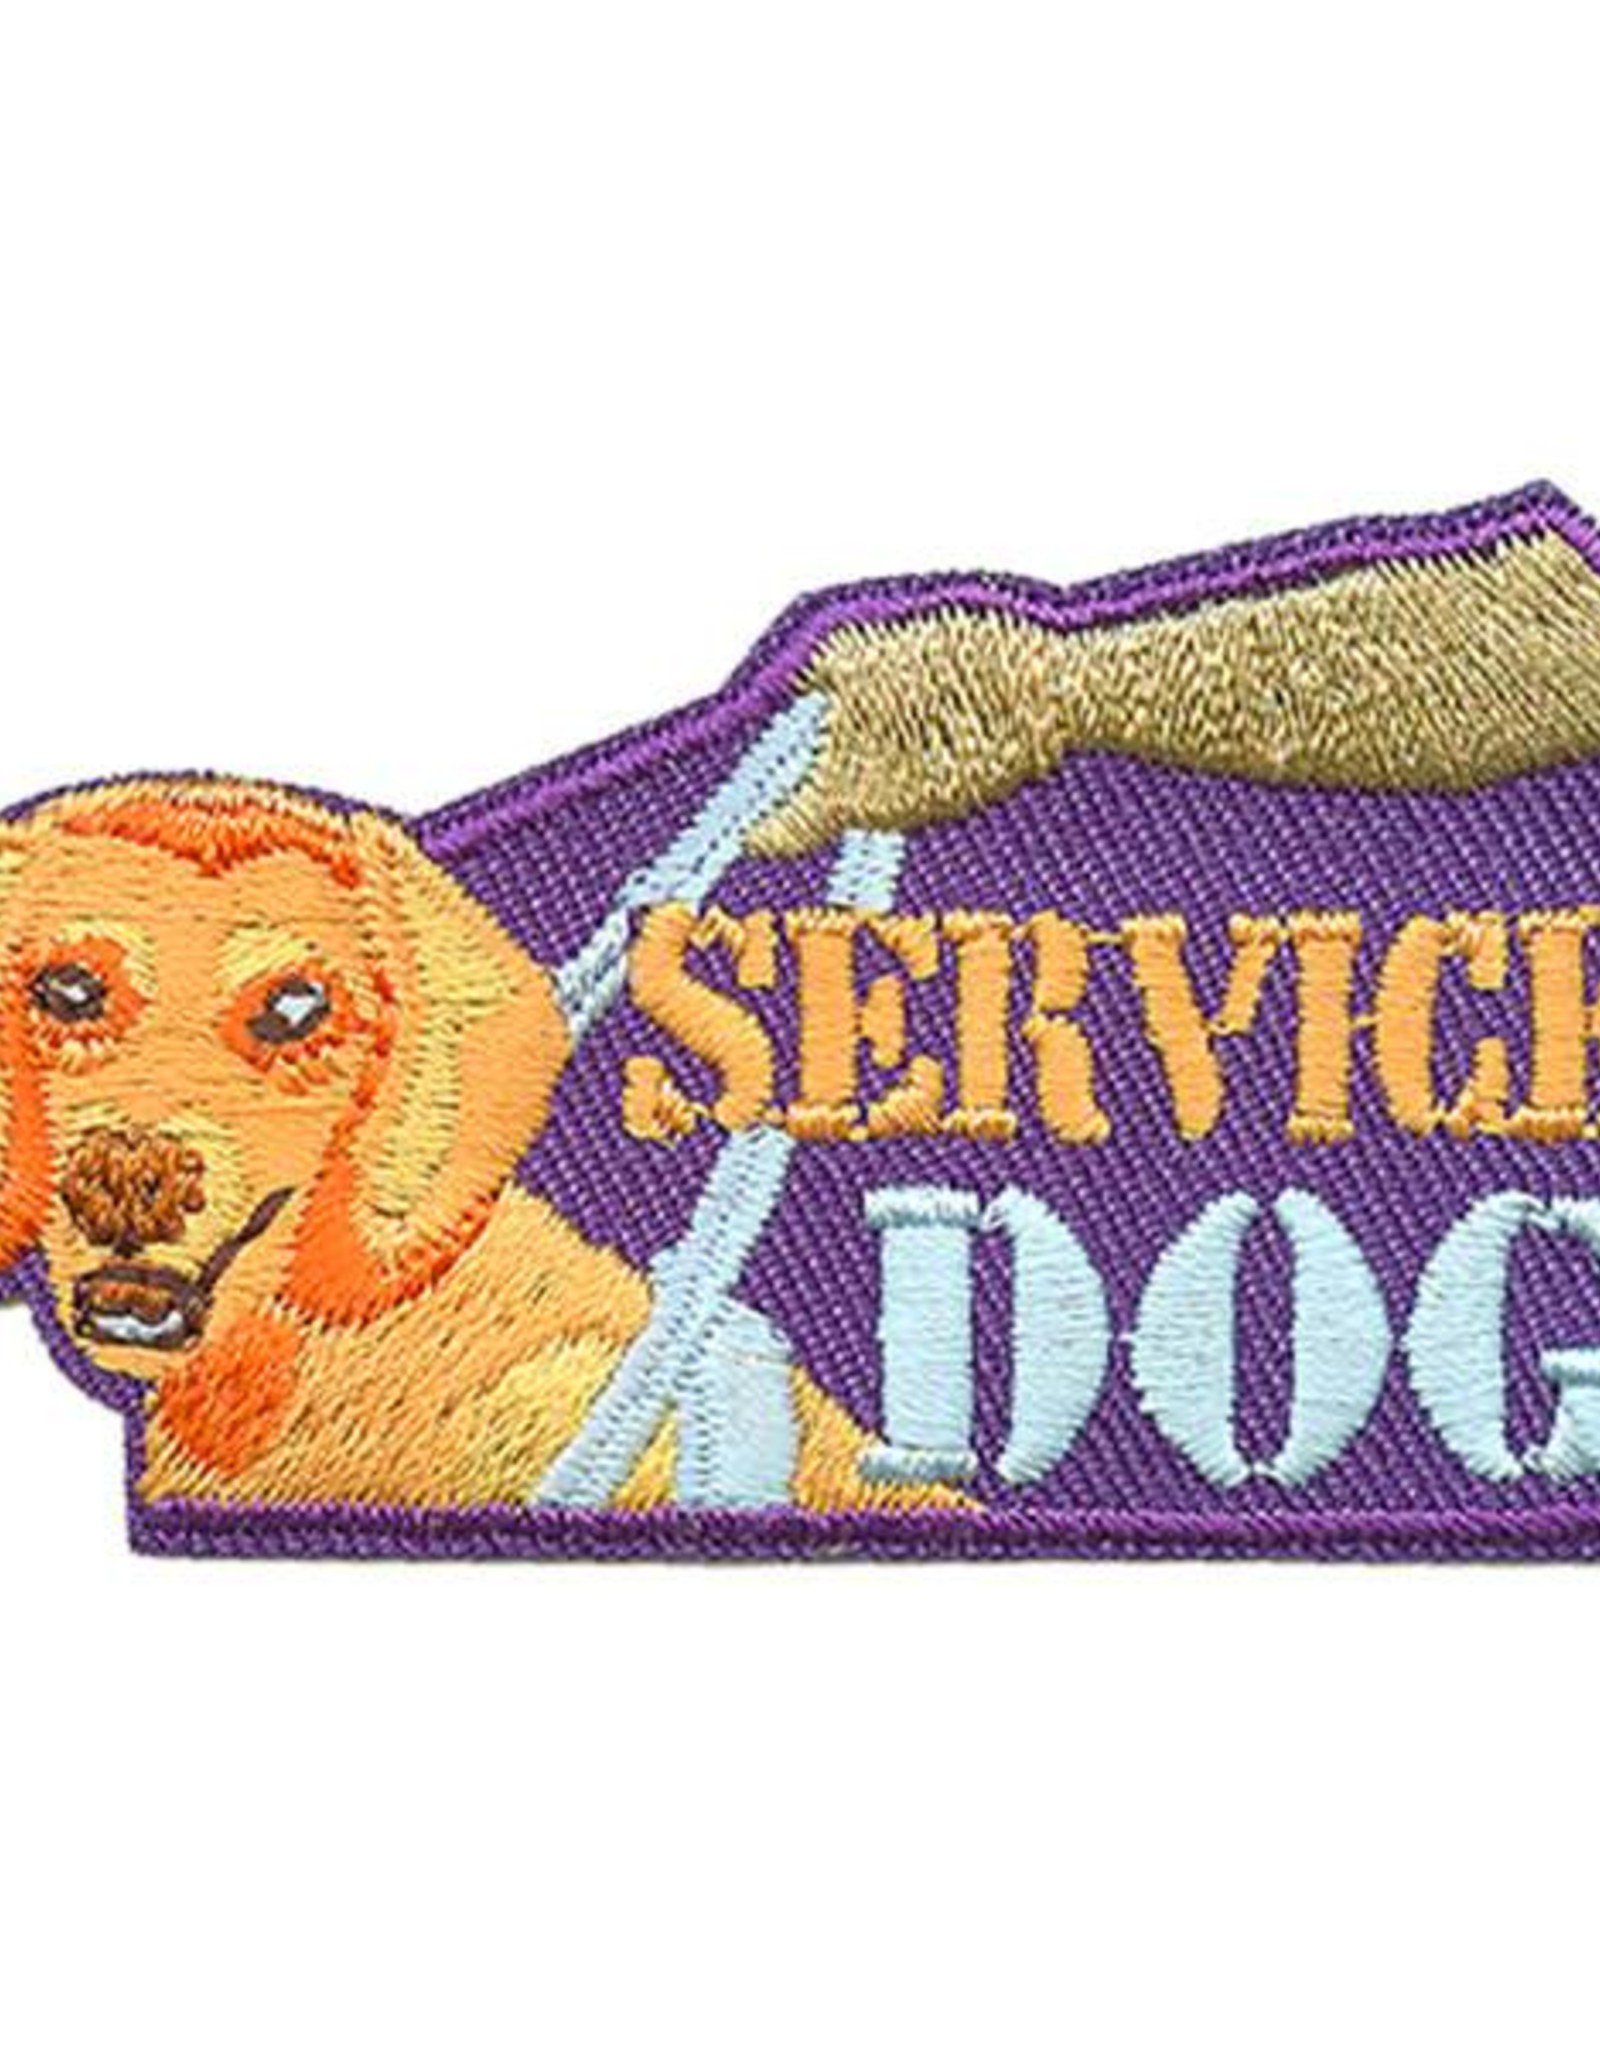 Advantage Emblem & Screen Prnt *Service Dog Fun Patch